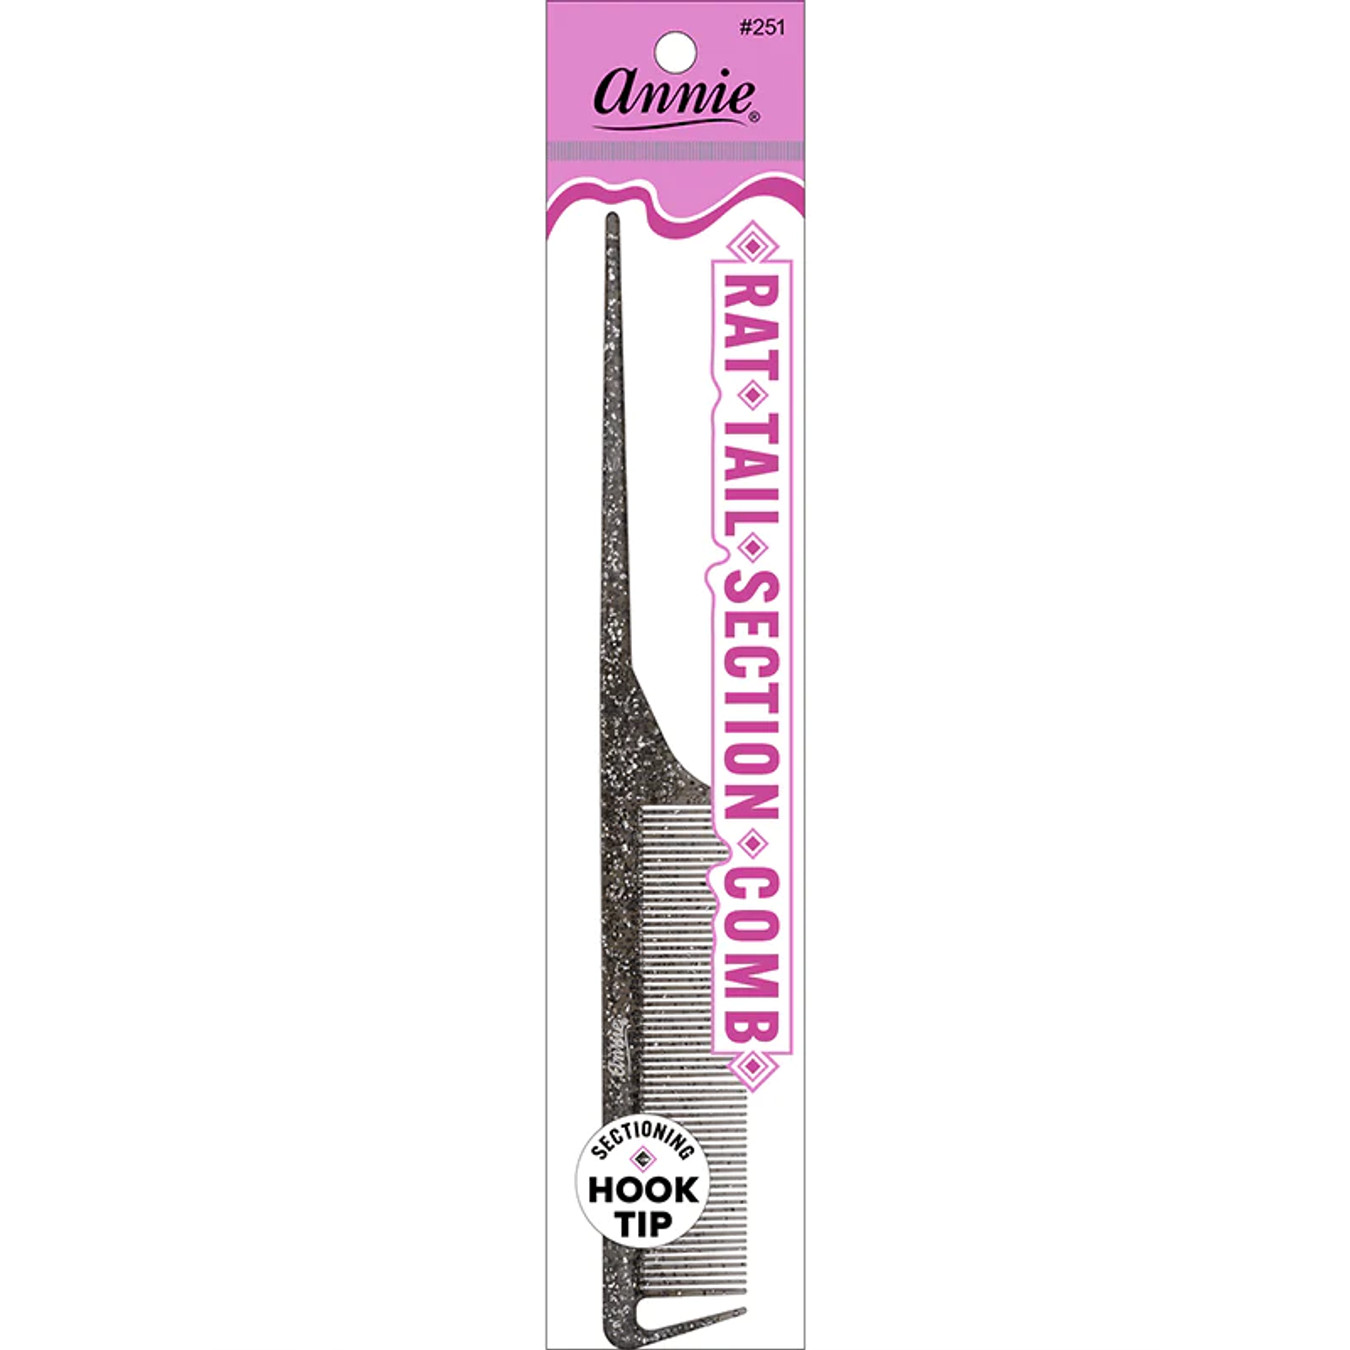 Annie Luminous Rat Tail Section Comb